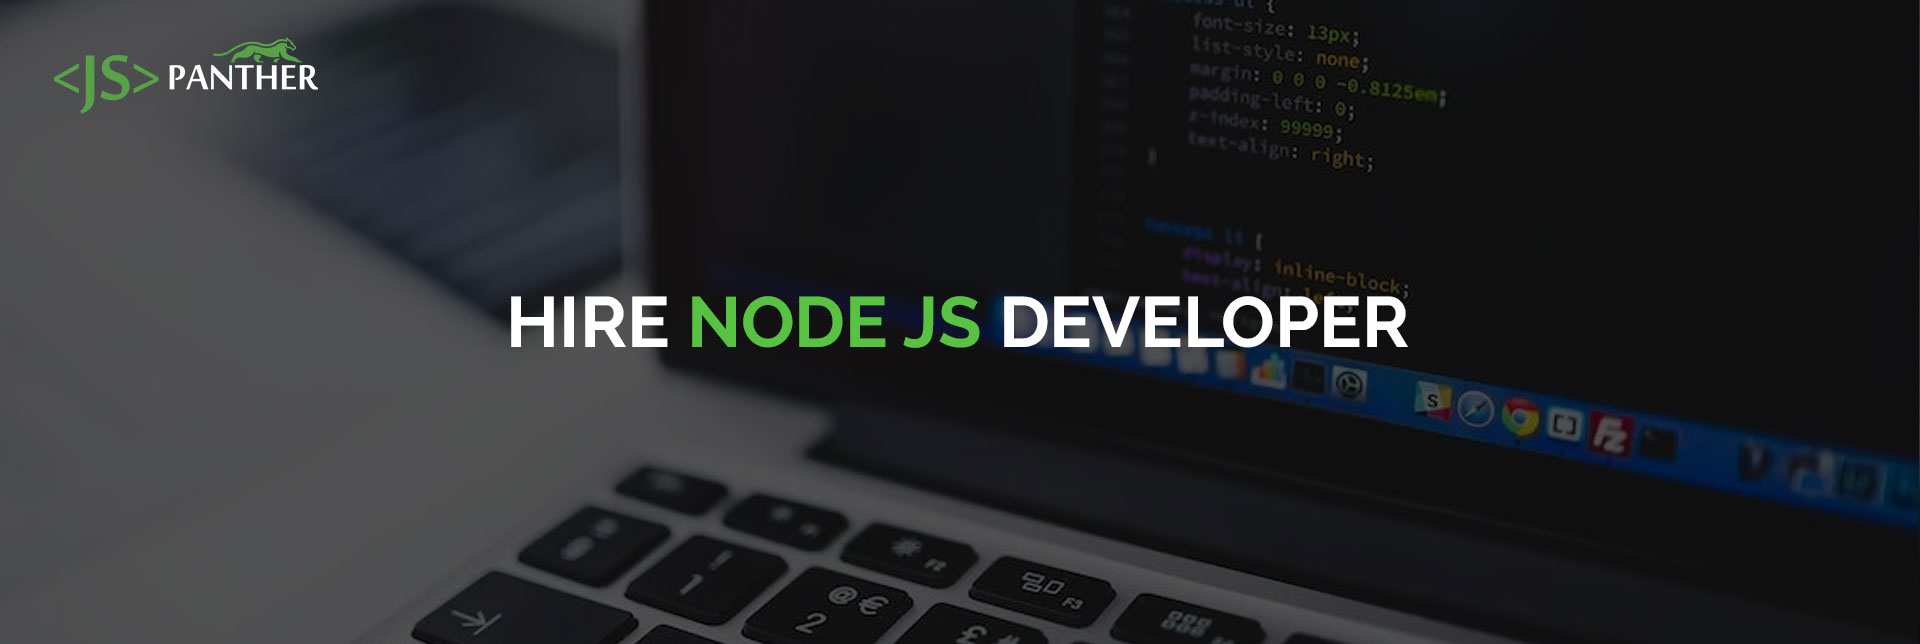 Hire Nodejs Developers | Hire Dedicated Node js Programmers